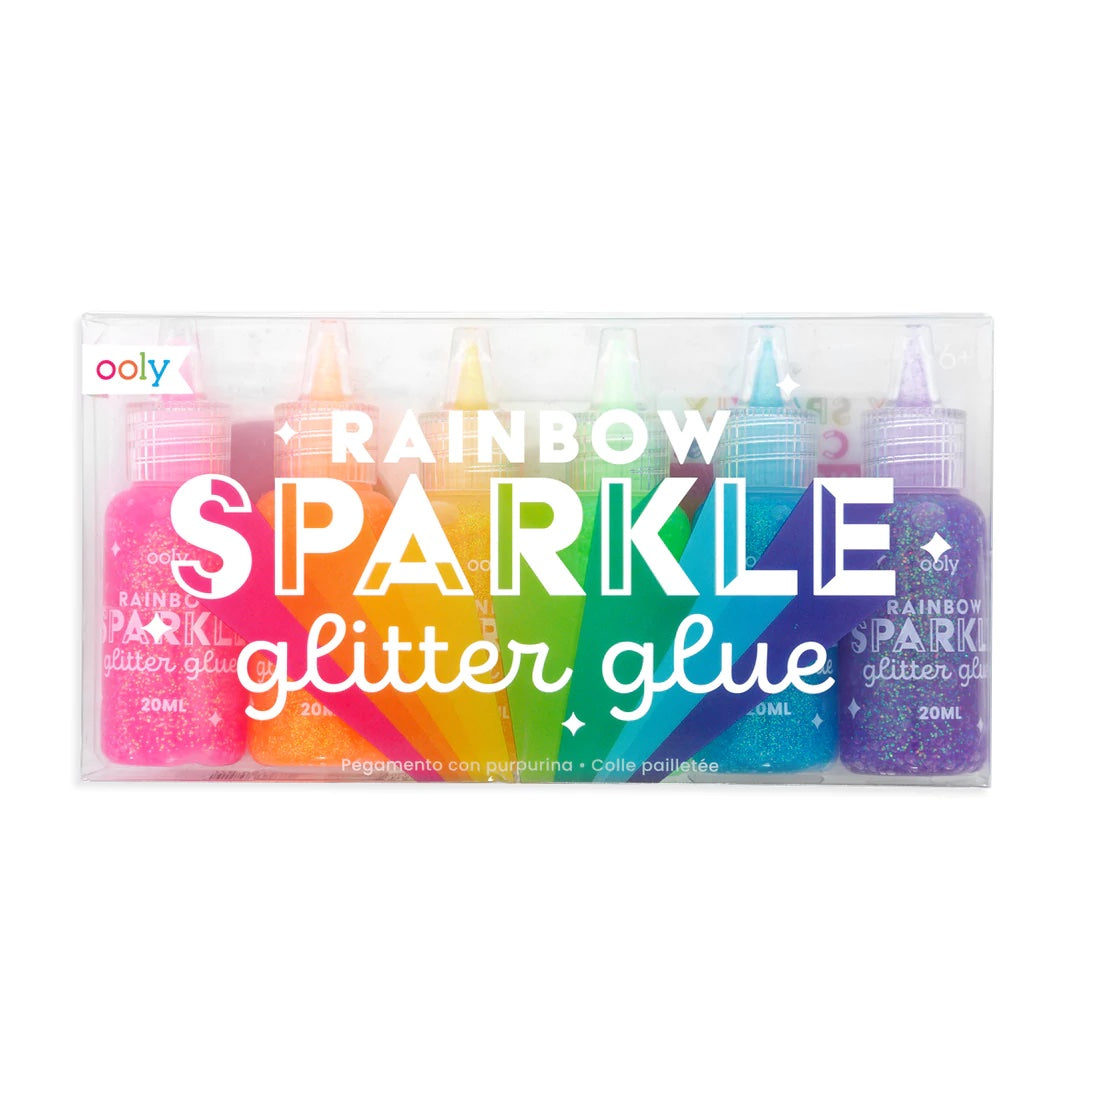 Rainbow Sparkle Glitter Glue - Set of 6